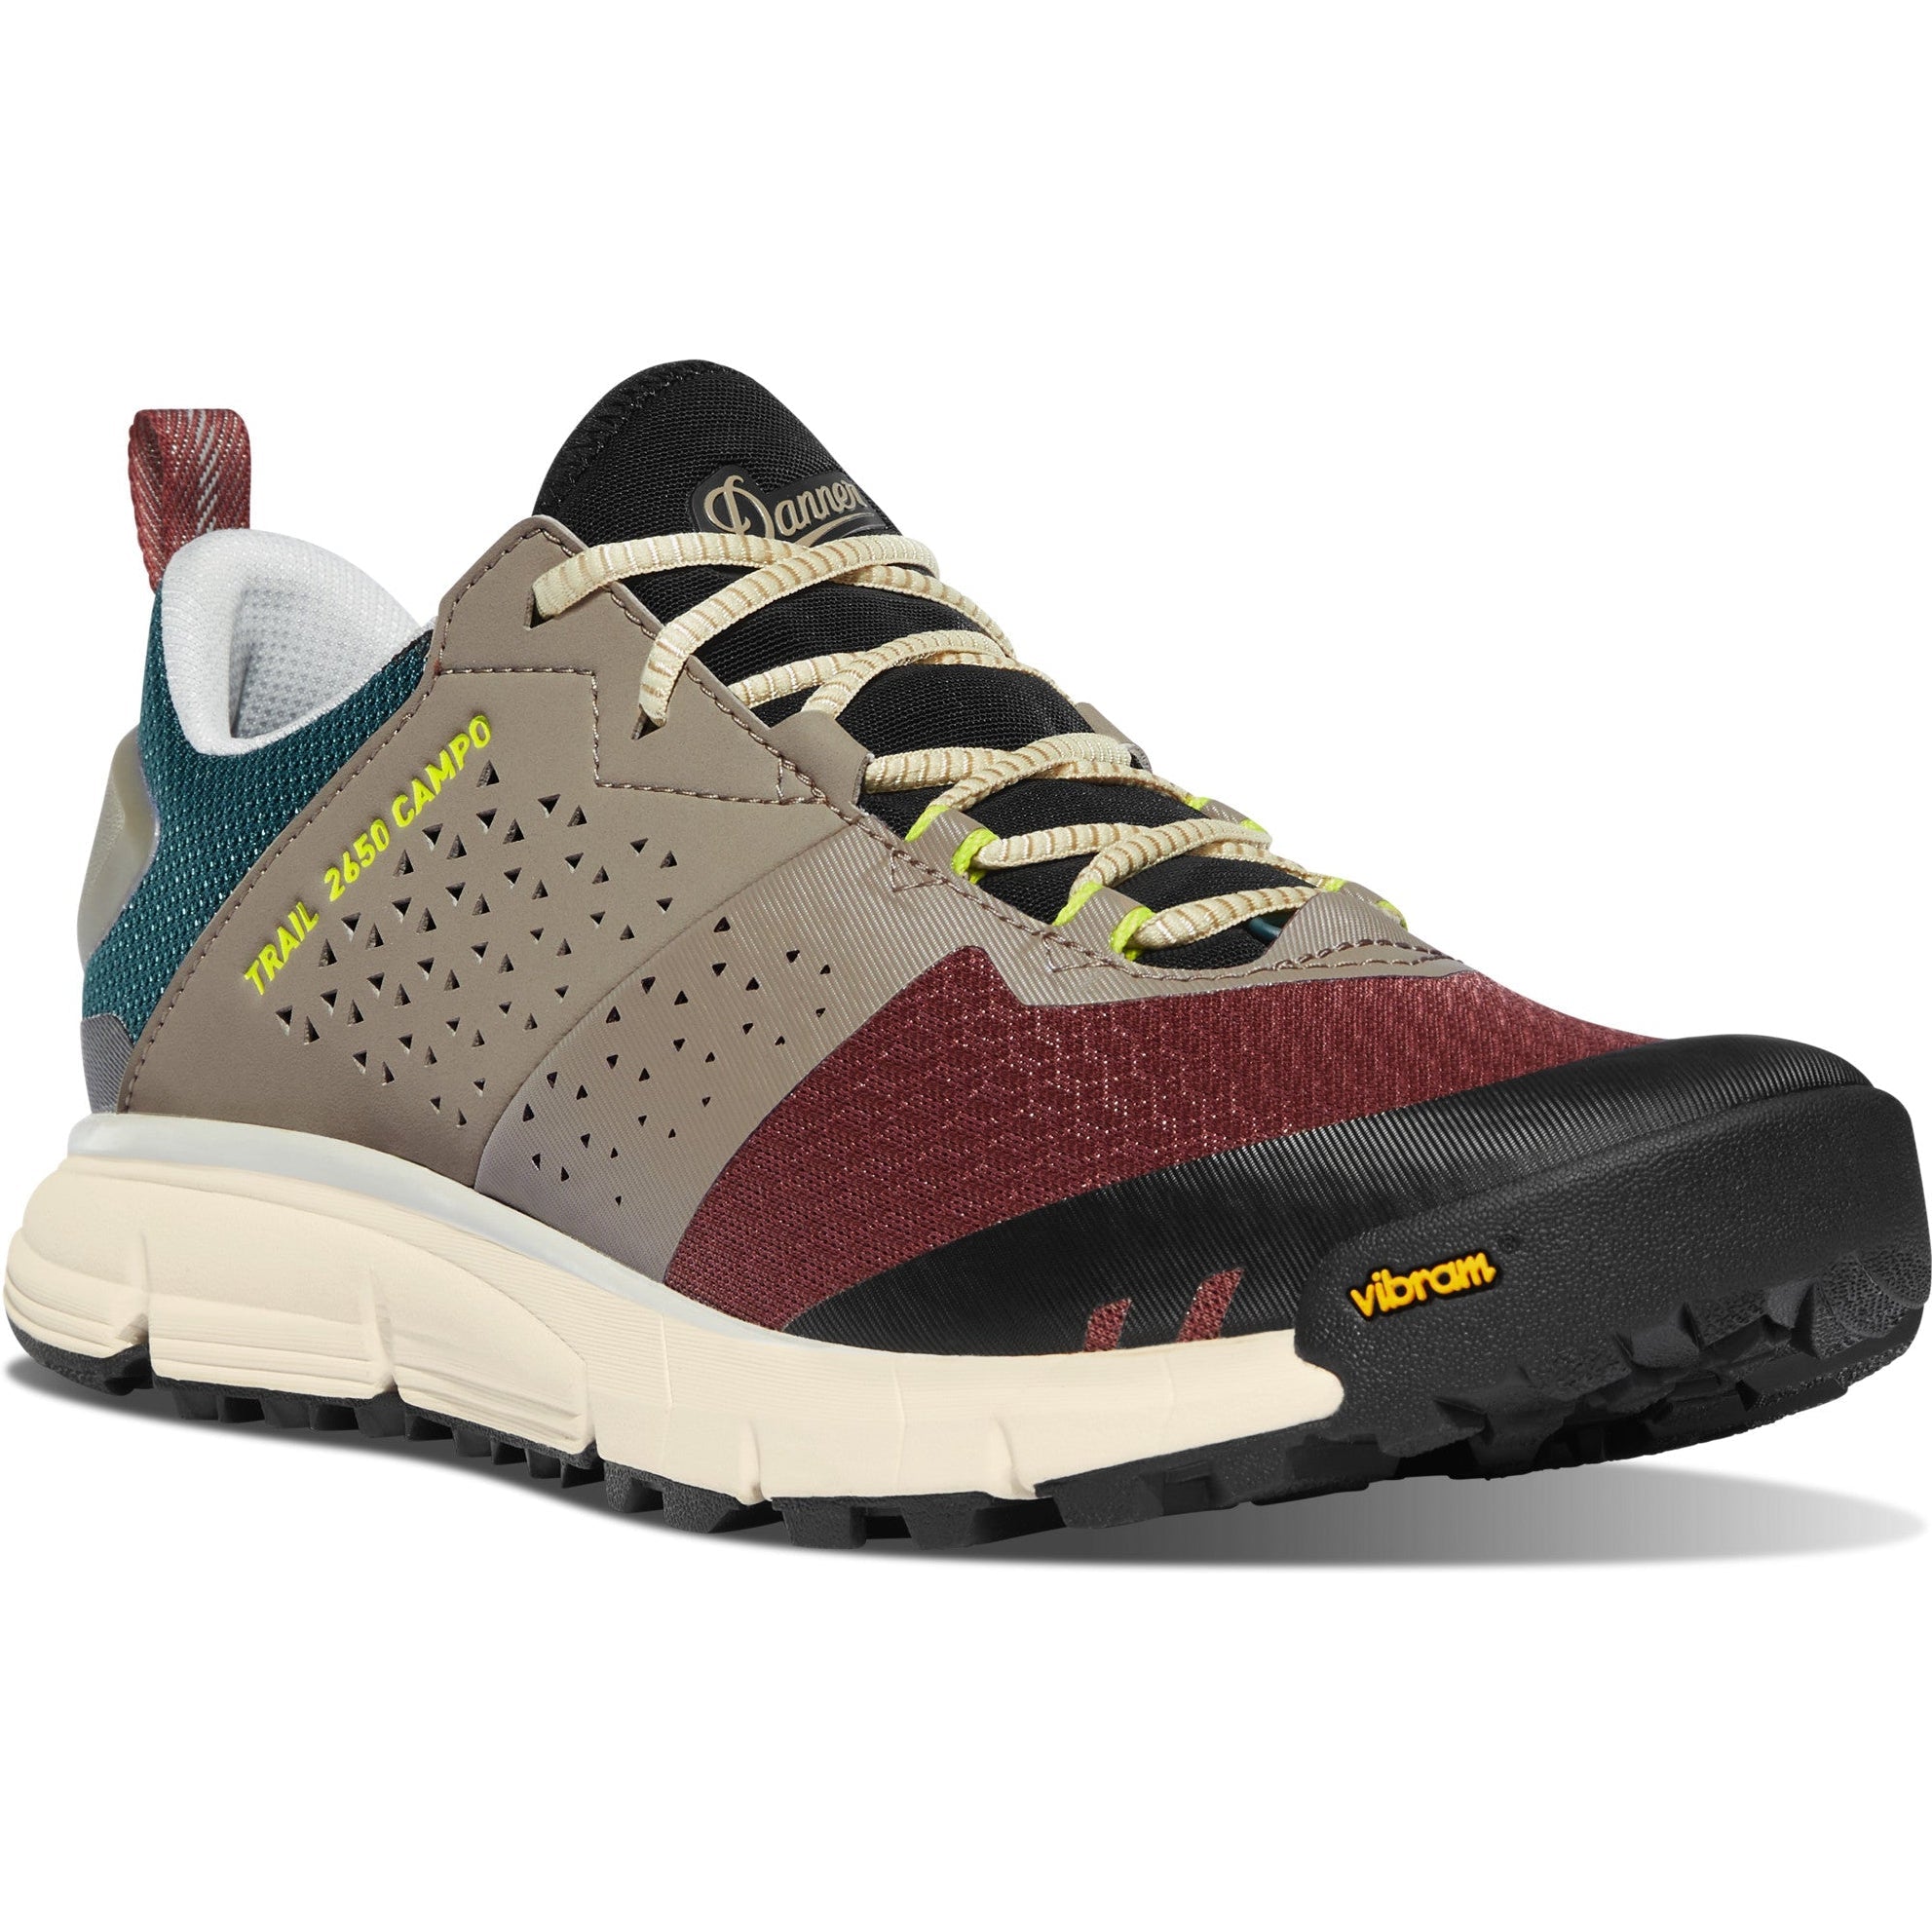 Danner Men's Trail 2650 Campo 3" Hiking Shoe - Brick - 68940 7 / Medium / Grey - Overlook Boots